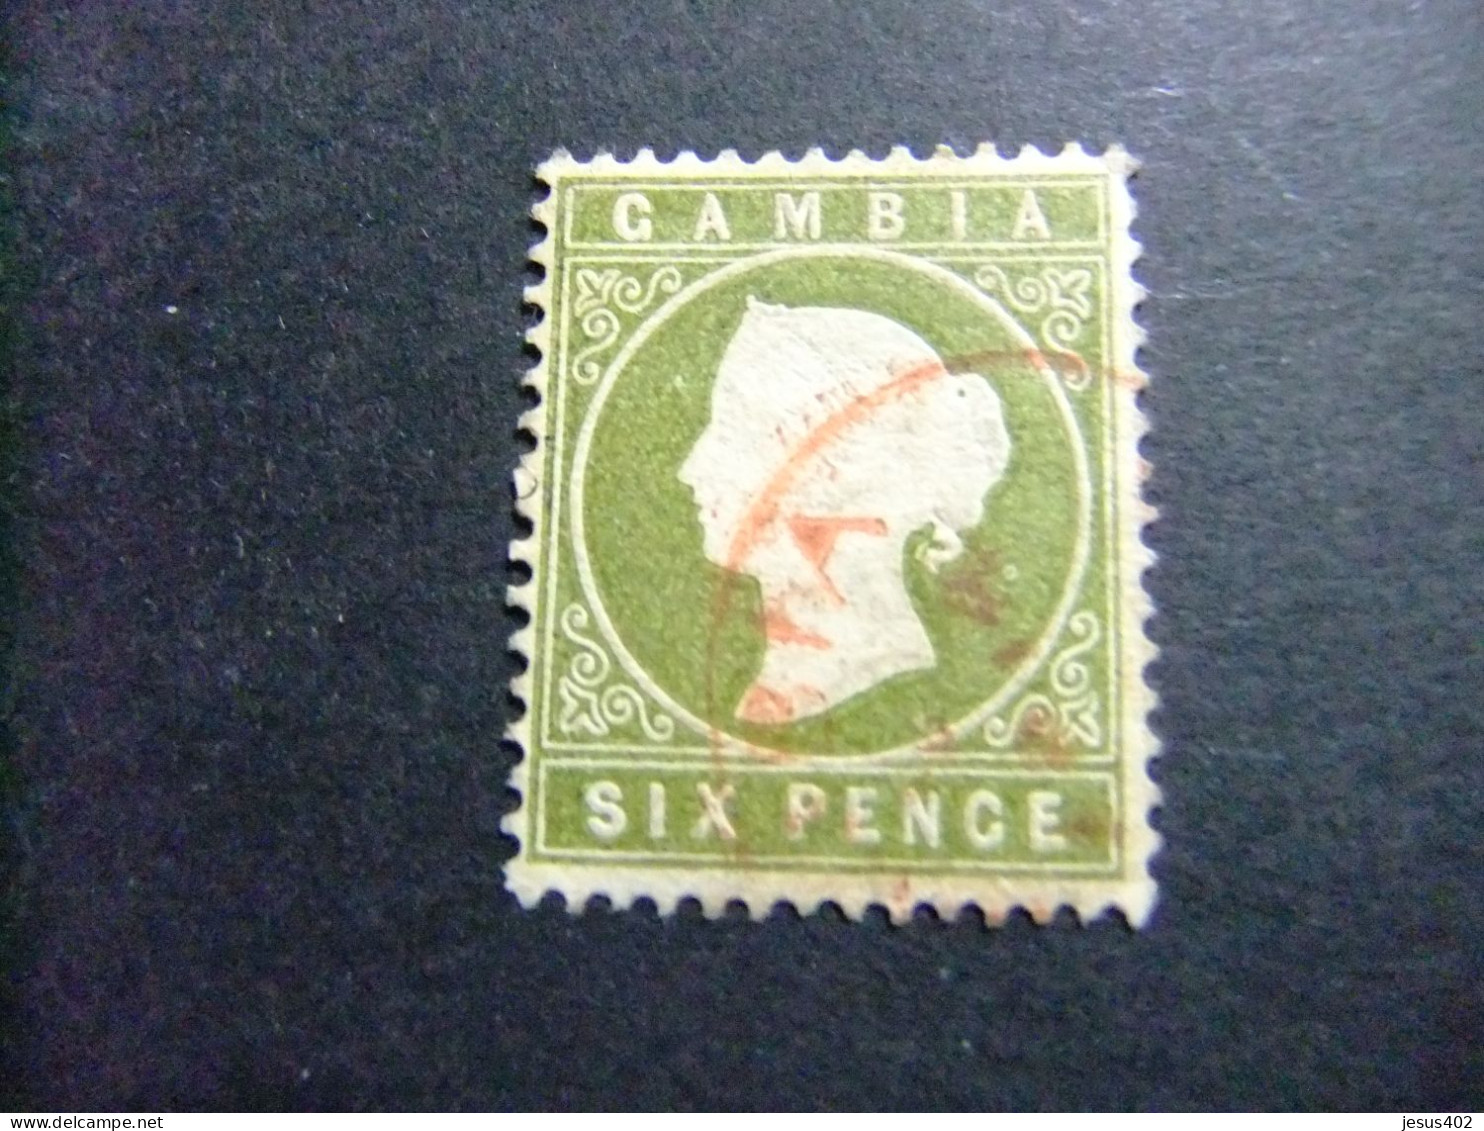 41 GAMBIA GAMBIE 1886 / REINA VICTORIA / VERDE OLIVA  / YVERT 18 A FU WMK CROWN CA Couché - Gambia (...-1964)